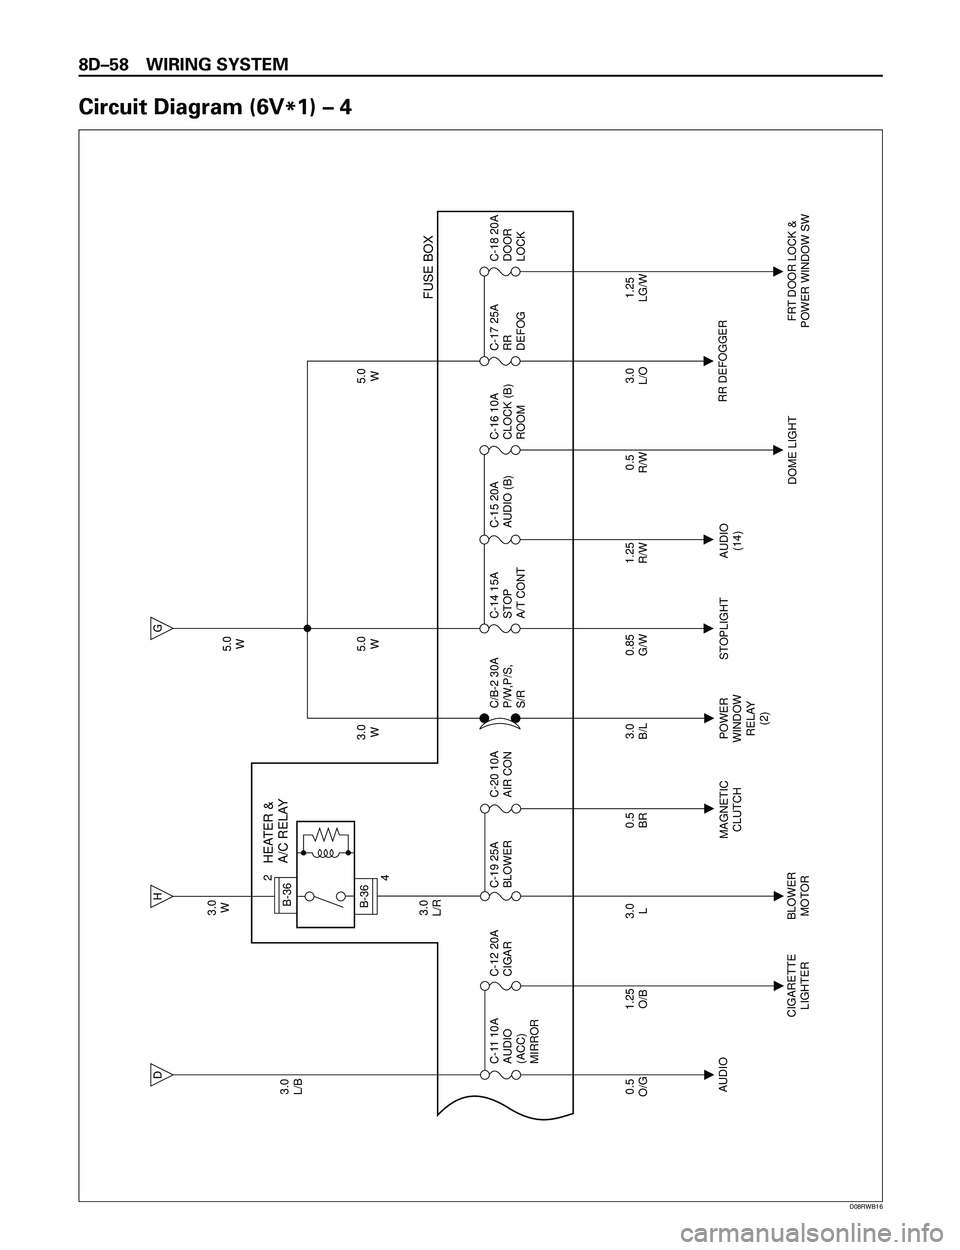 ISUZU TROOPER 1998  Service Owners Manual 8DÐ58 WIRING SYSTEM
Circuit Diagram (6V
*1) Ð 4
D
H
G
3.0
W
3.0
L/R 3.0
L/B
0.5
O/G
AUDIO
CIGARETTE
LIGHTERBLOWER
MOTORMAGNETIC
CLUTCHPOWER
WINDOW
RELAY
(2)STOPLIGHT AUDIO
(14)
DOME LIGHTRR DEFOGGER